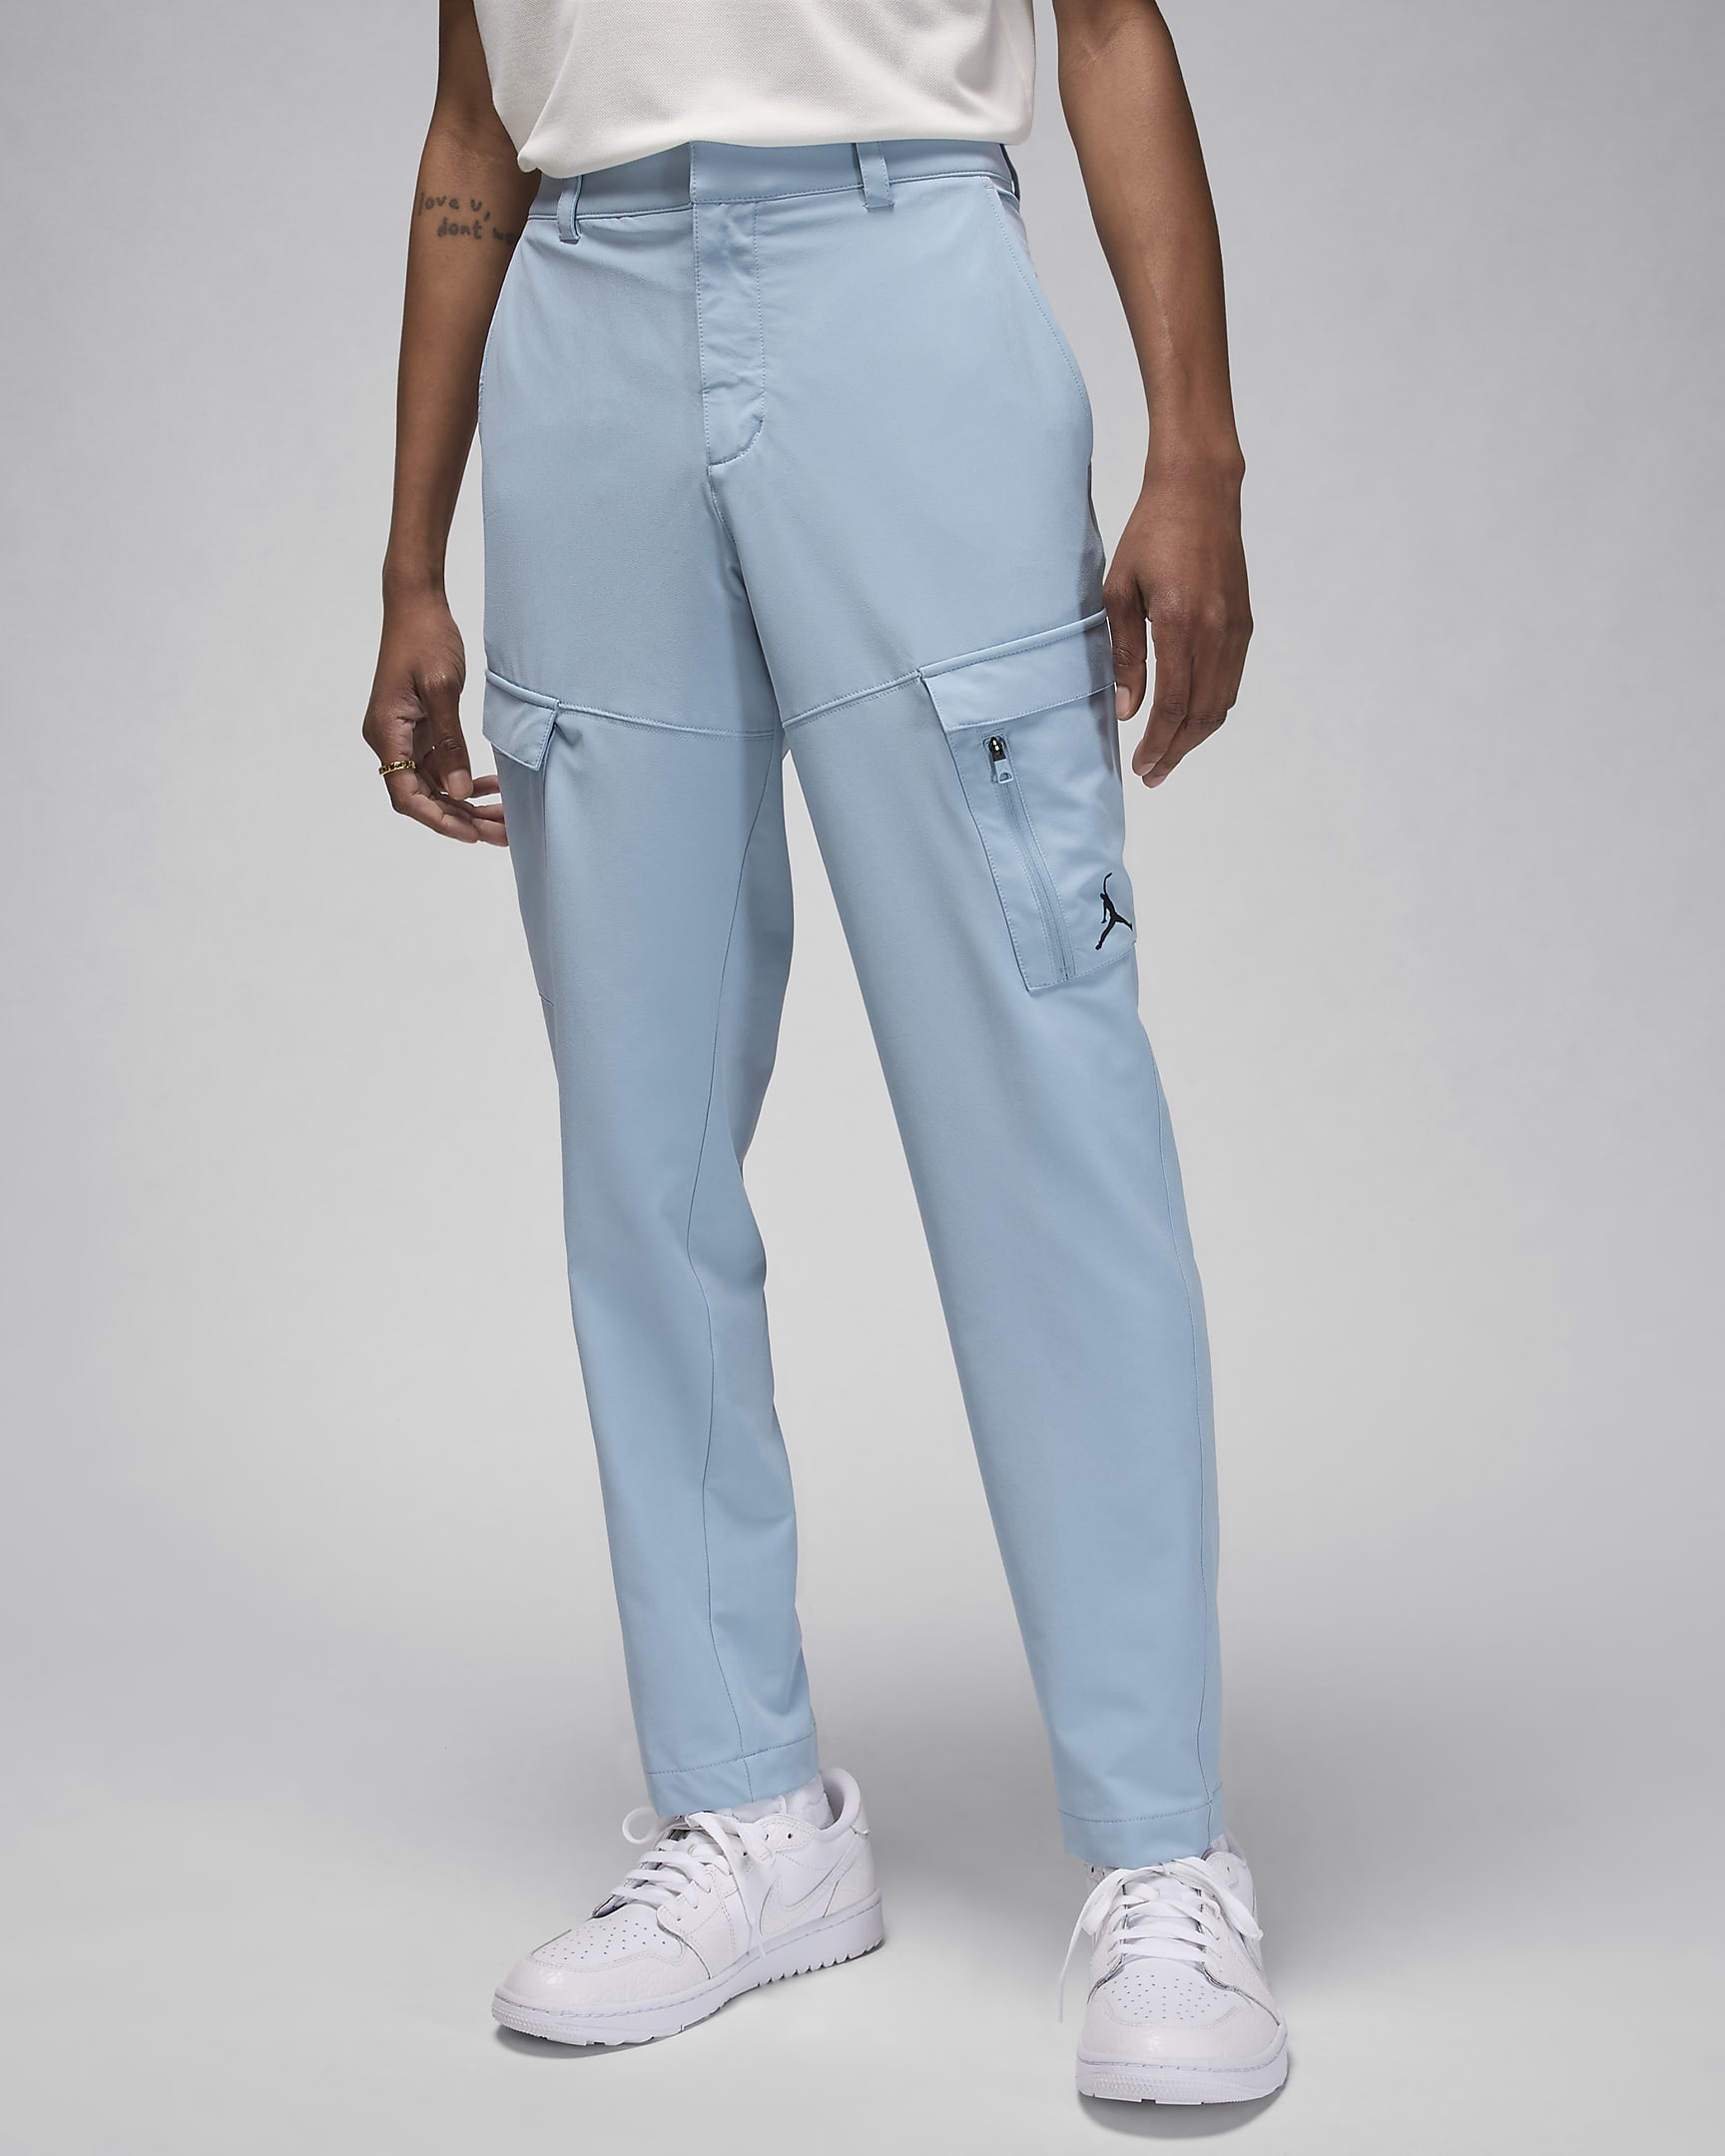 Jordan Golf Men's Trousers - Blue Grey/Black